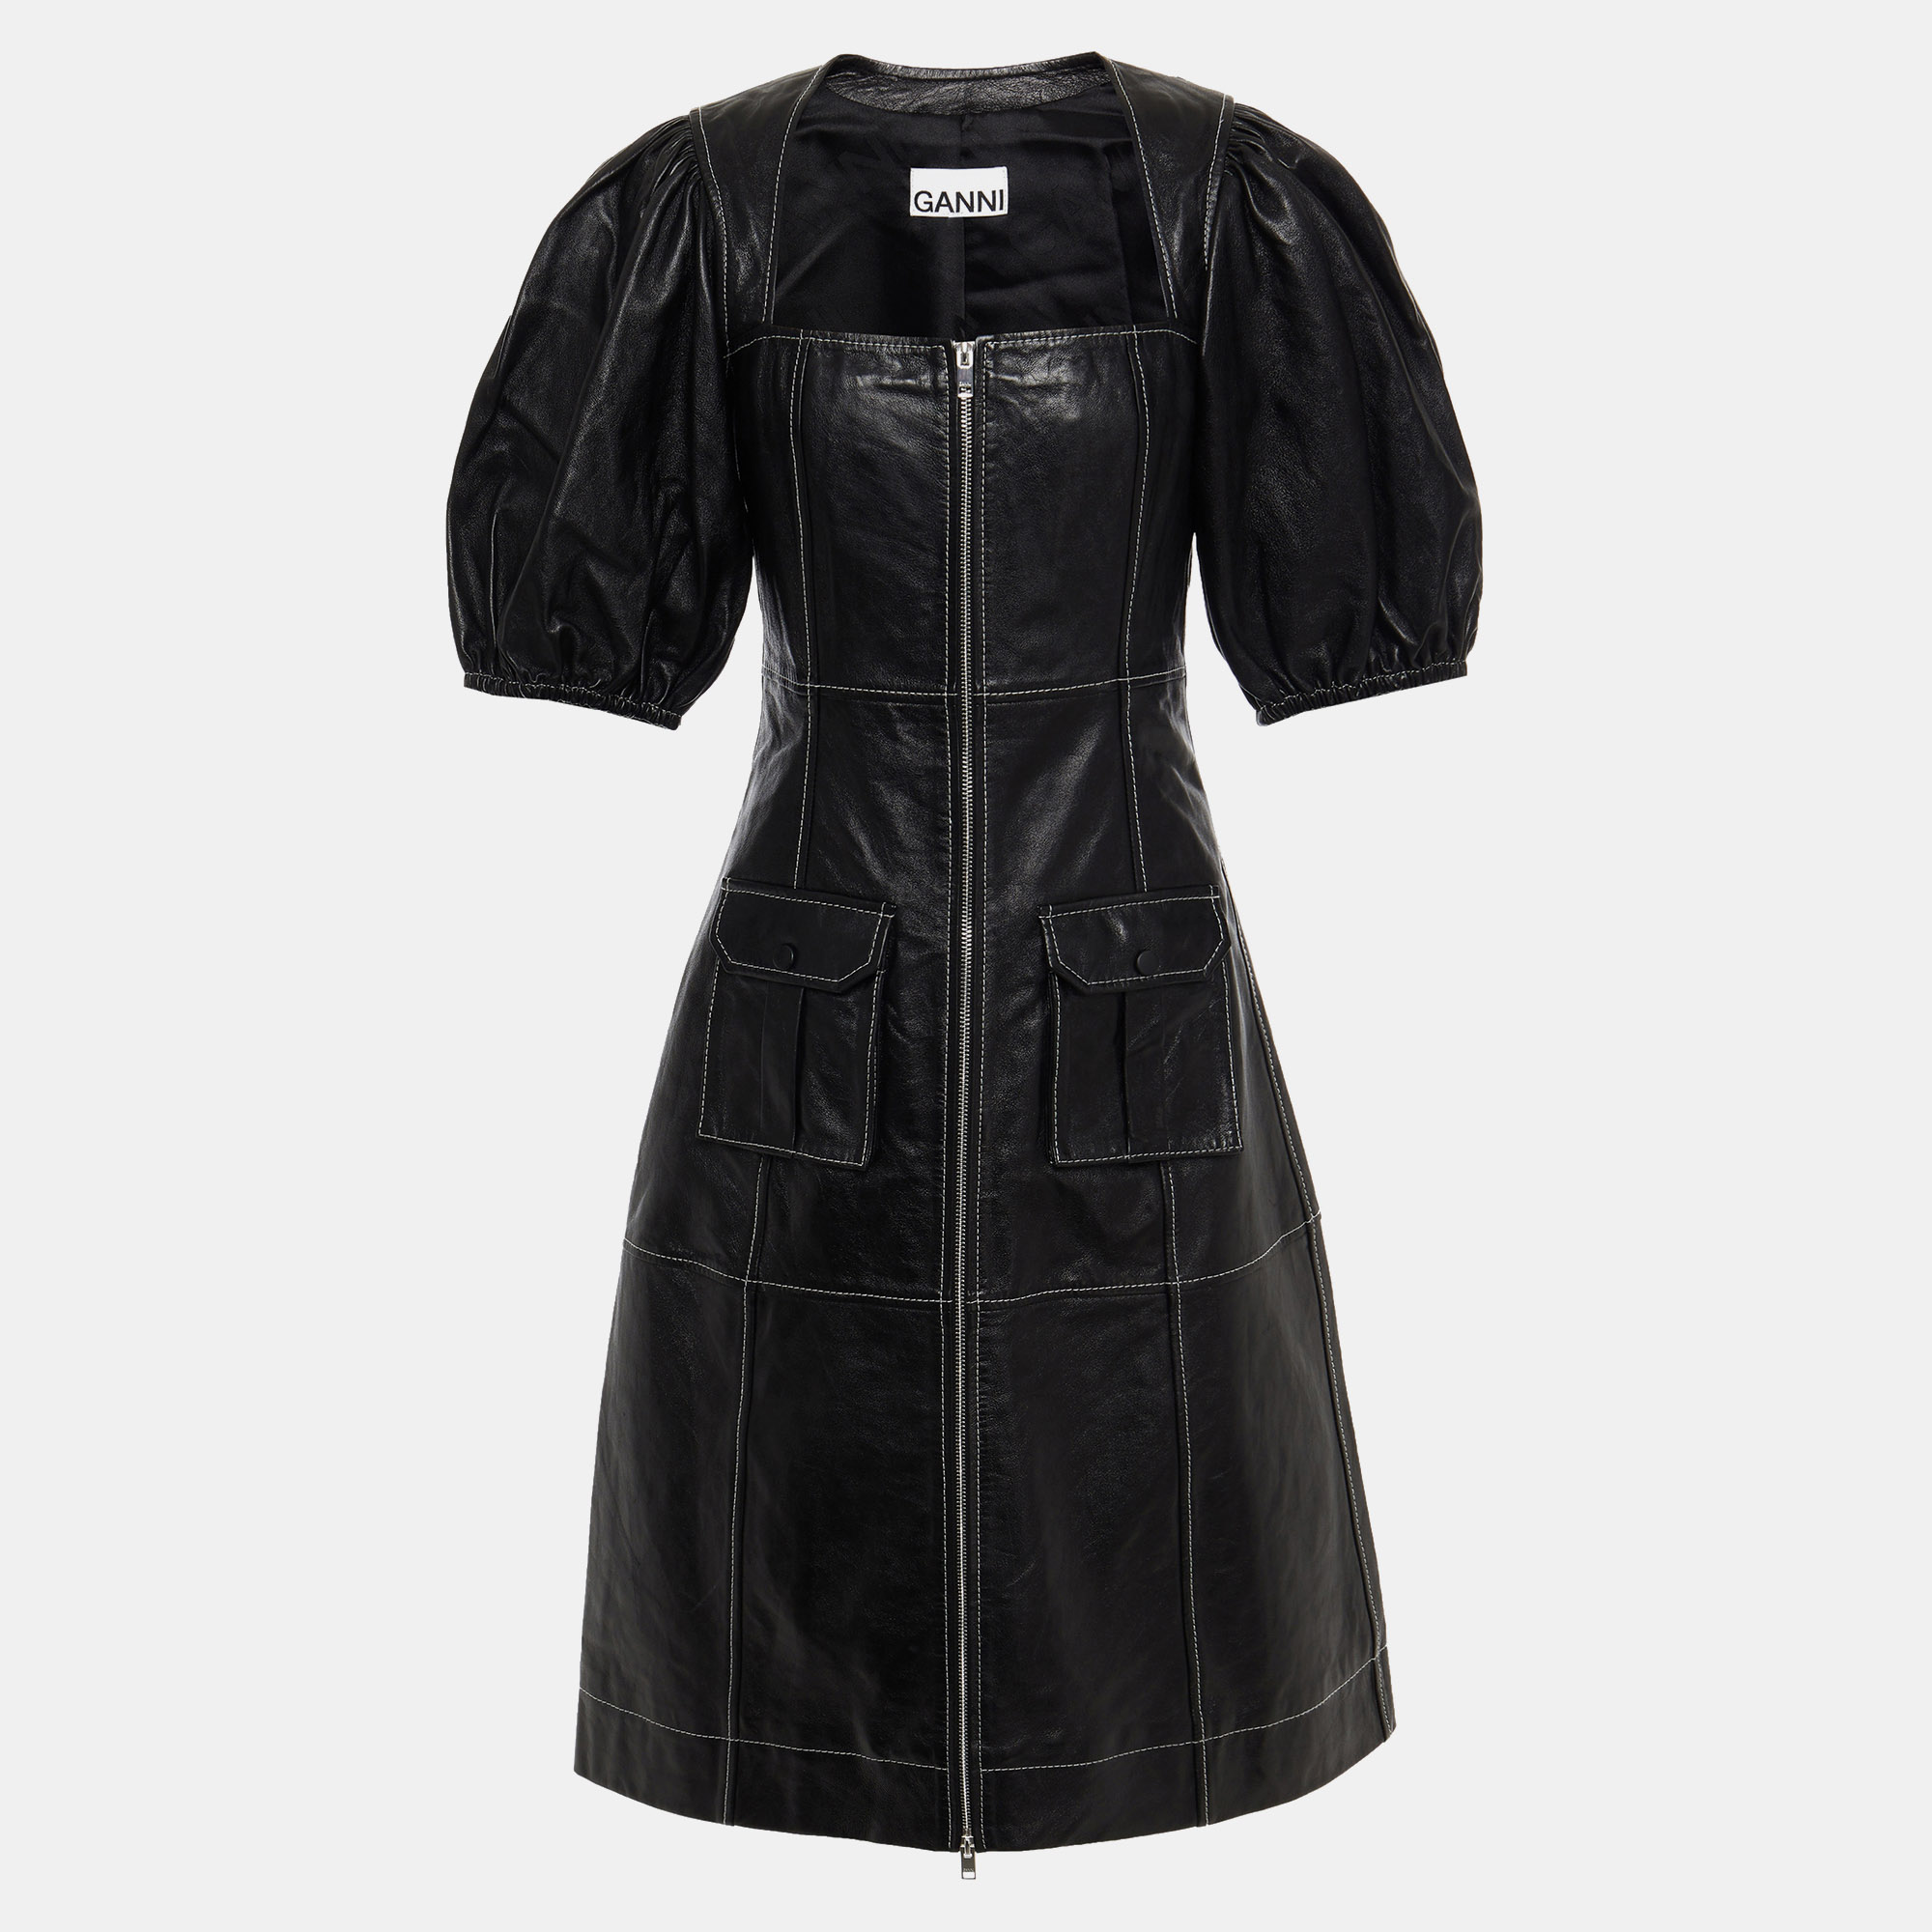 Ganni black leather midi dress s (eu 36)